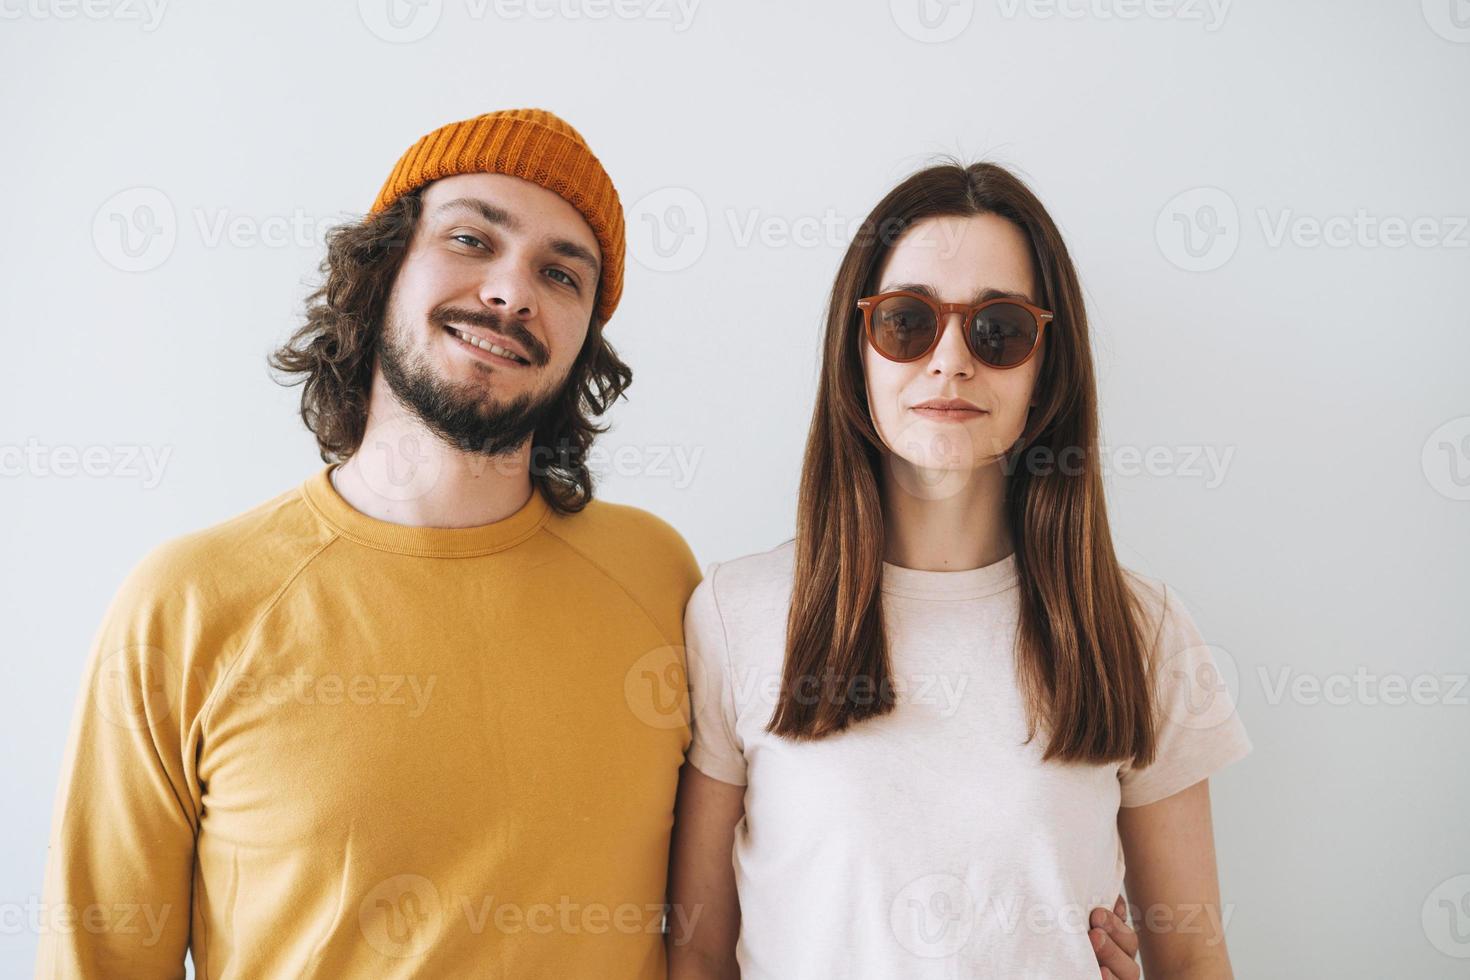 retrato de casal sorridente jovens descolados da família contra a parede cinza foto